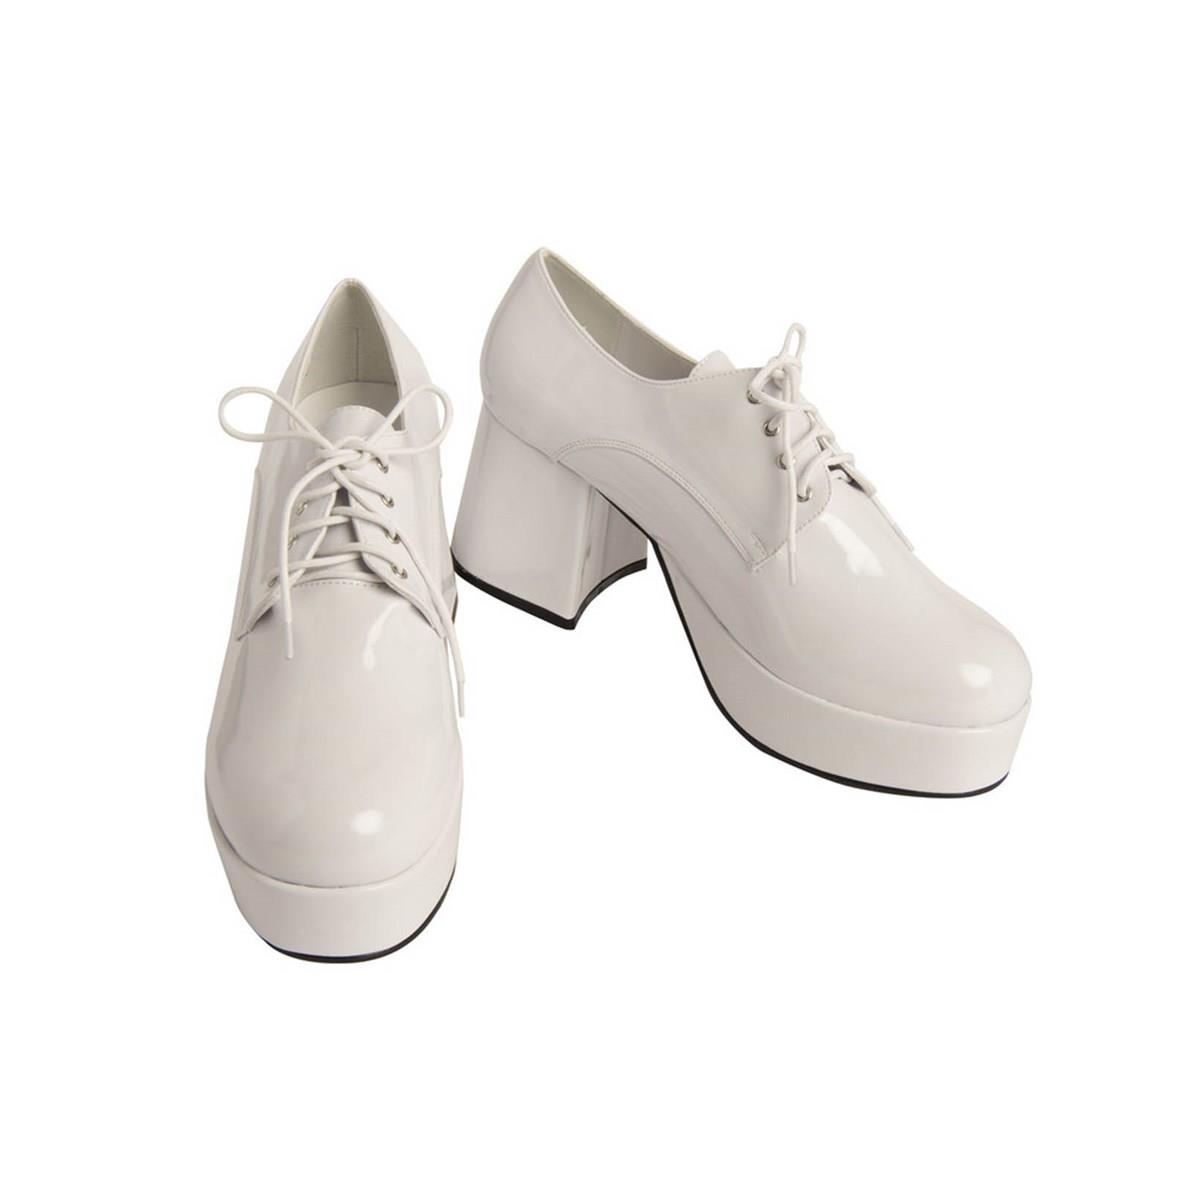 Picture of Rubies 283957 Mens Pimp Platform White Shoes, Size 8-9